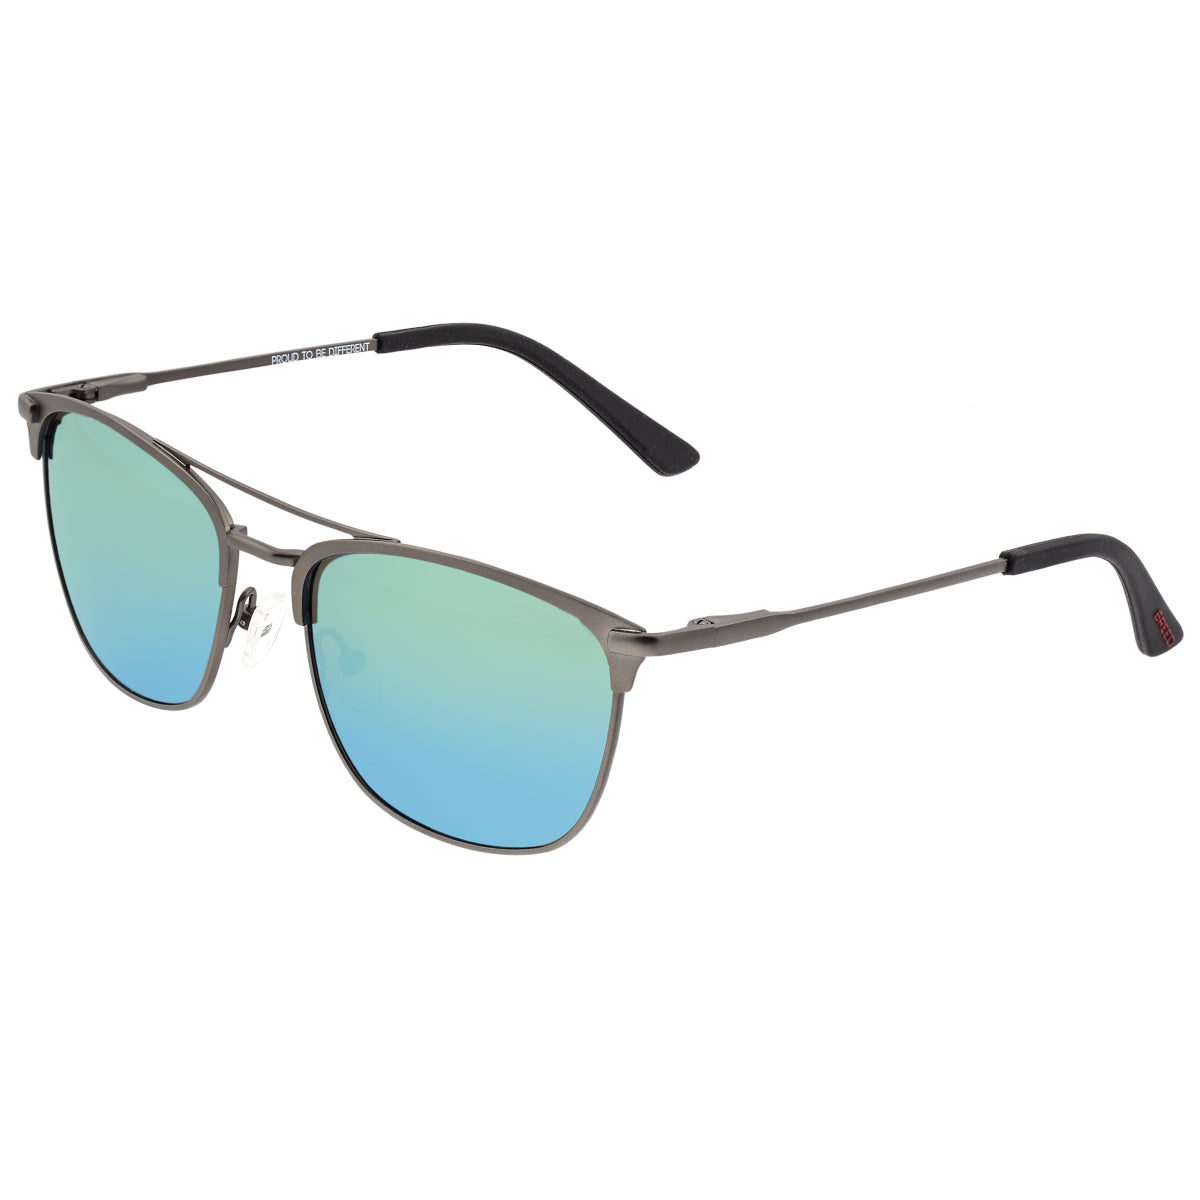 Breed Zodiac Titanium Polarized Sunglasses - Gunmetal/Green-Blue - BSG053GM